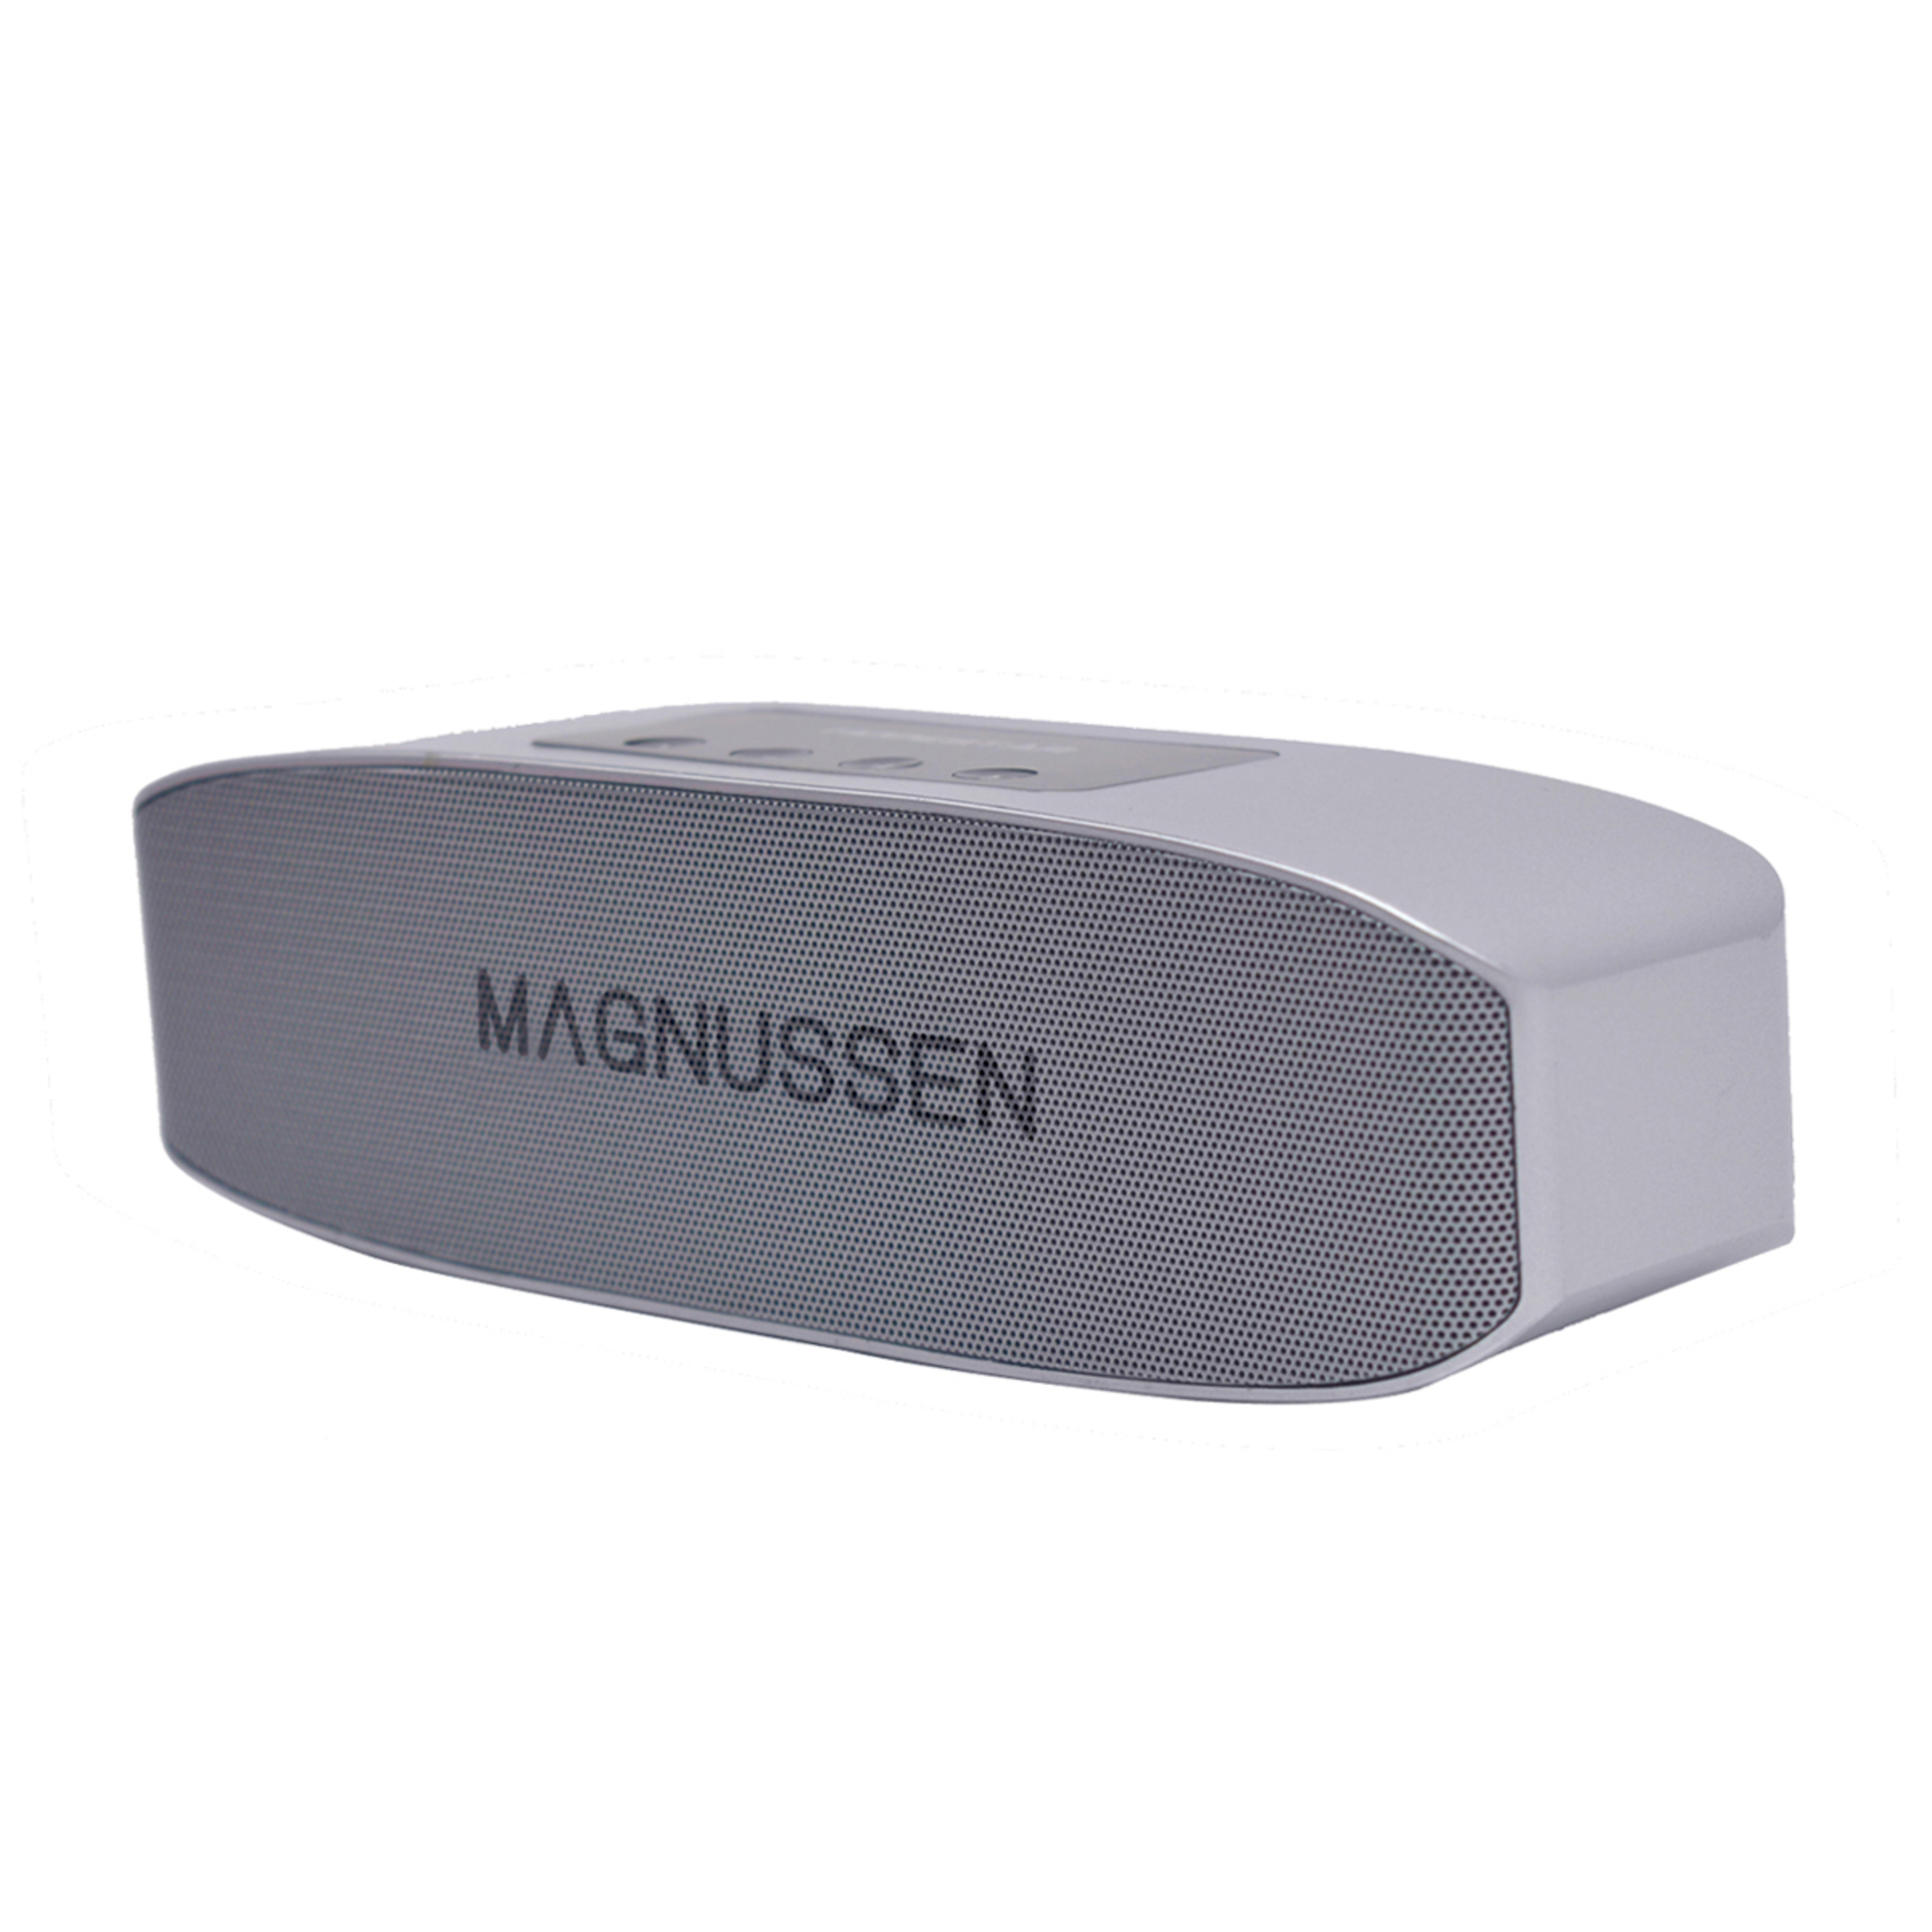 Altifalante Magnussen S3 Bluetooth - plateado - 